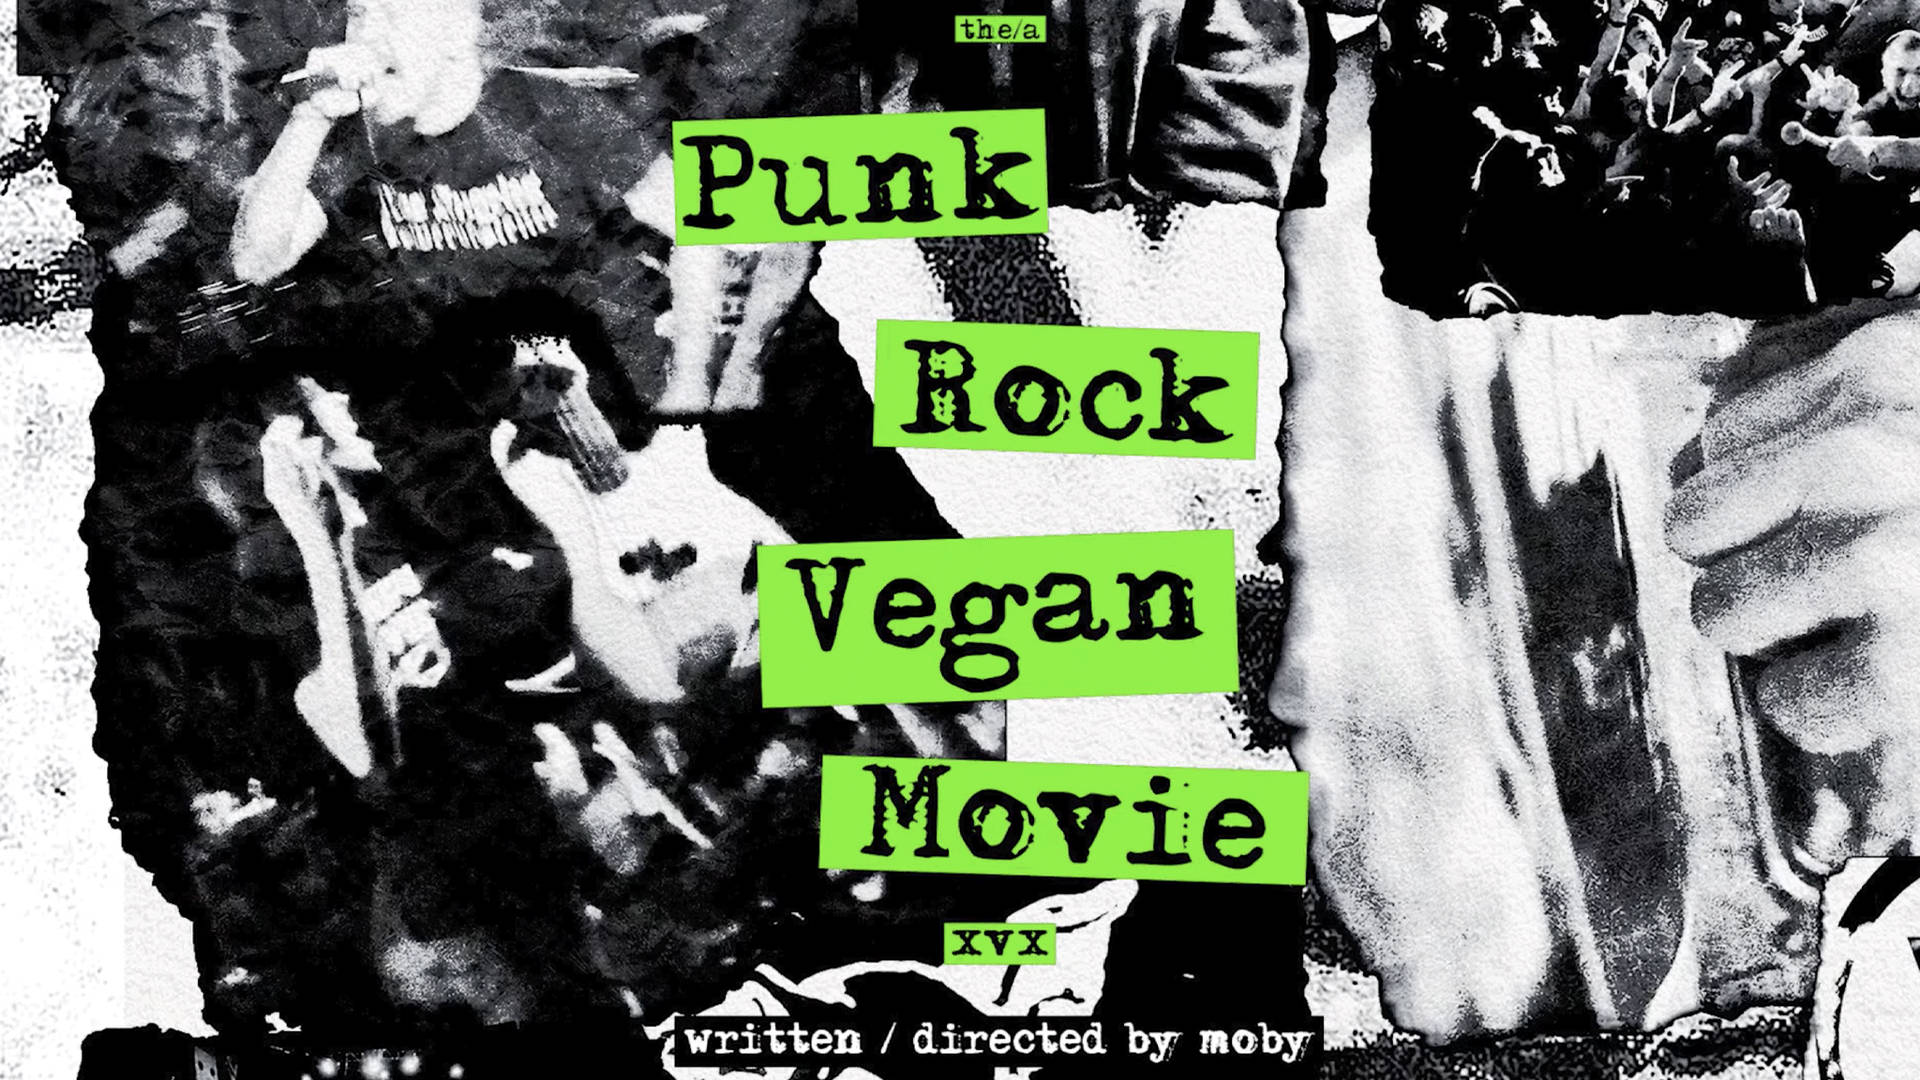 Derpunk-rock-veganer-film Wallpaper